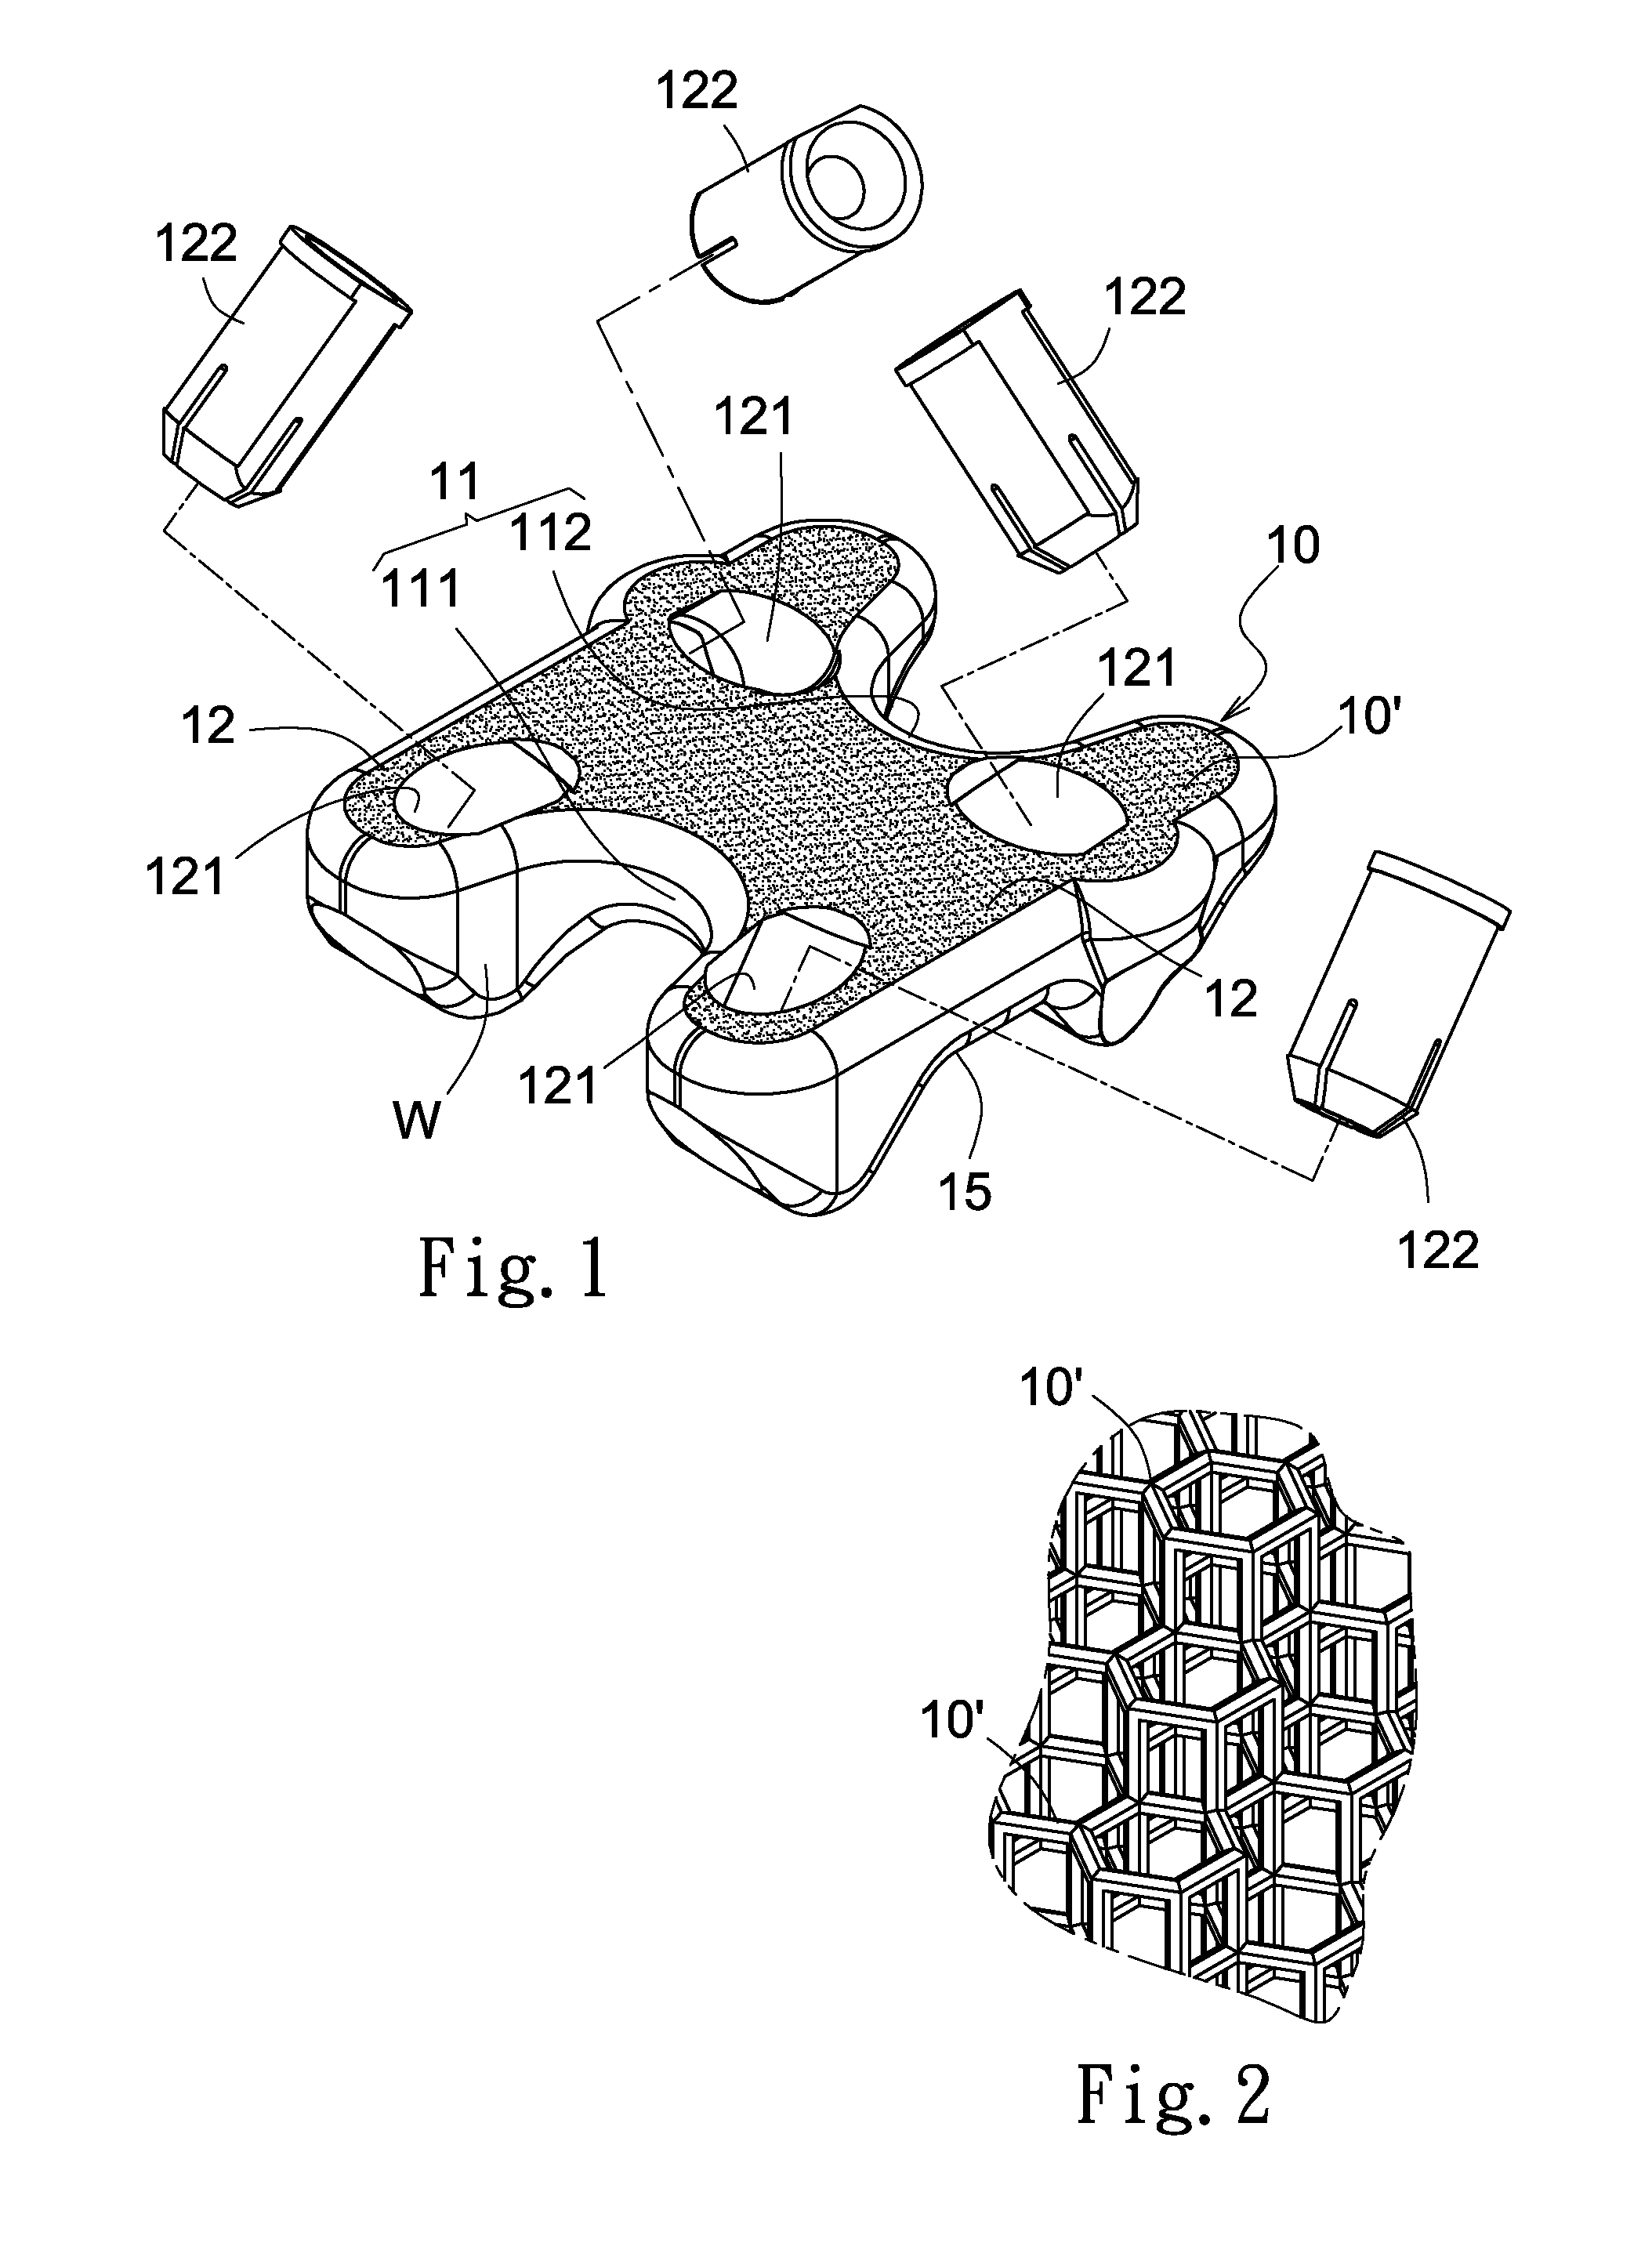 Vertebral fixation apparatus